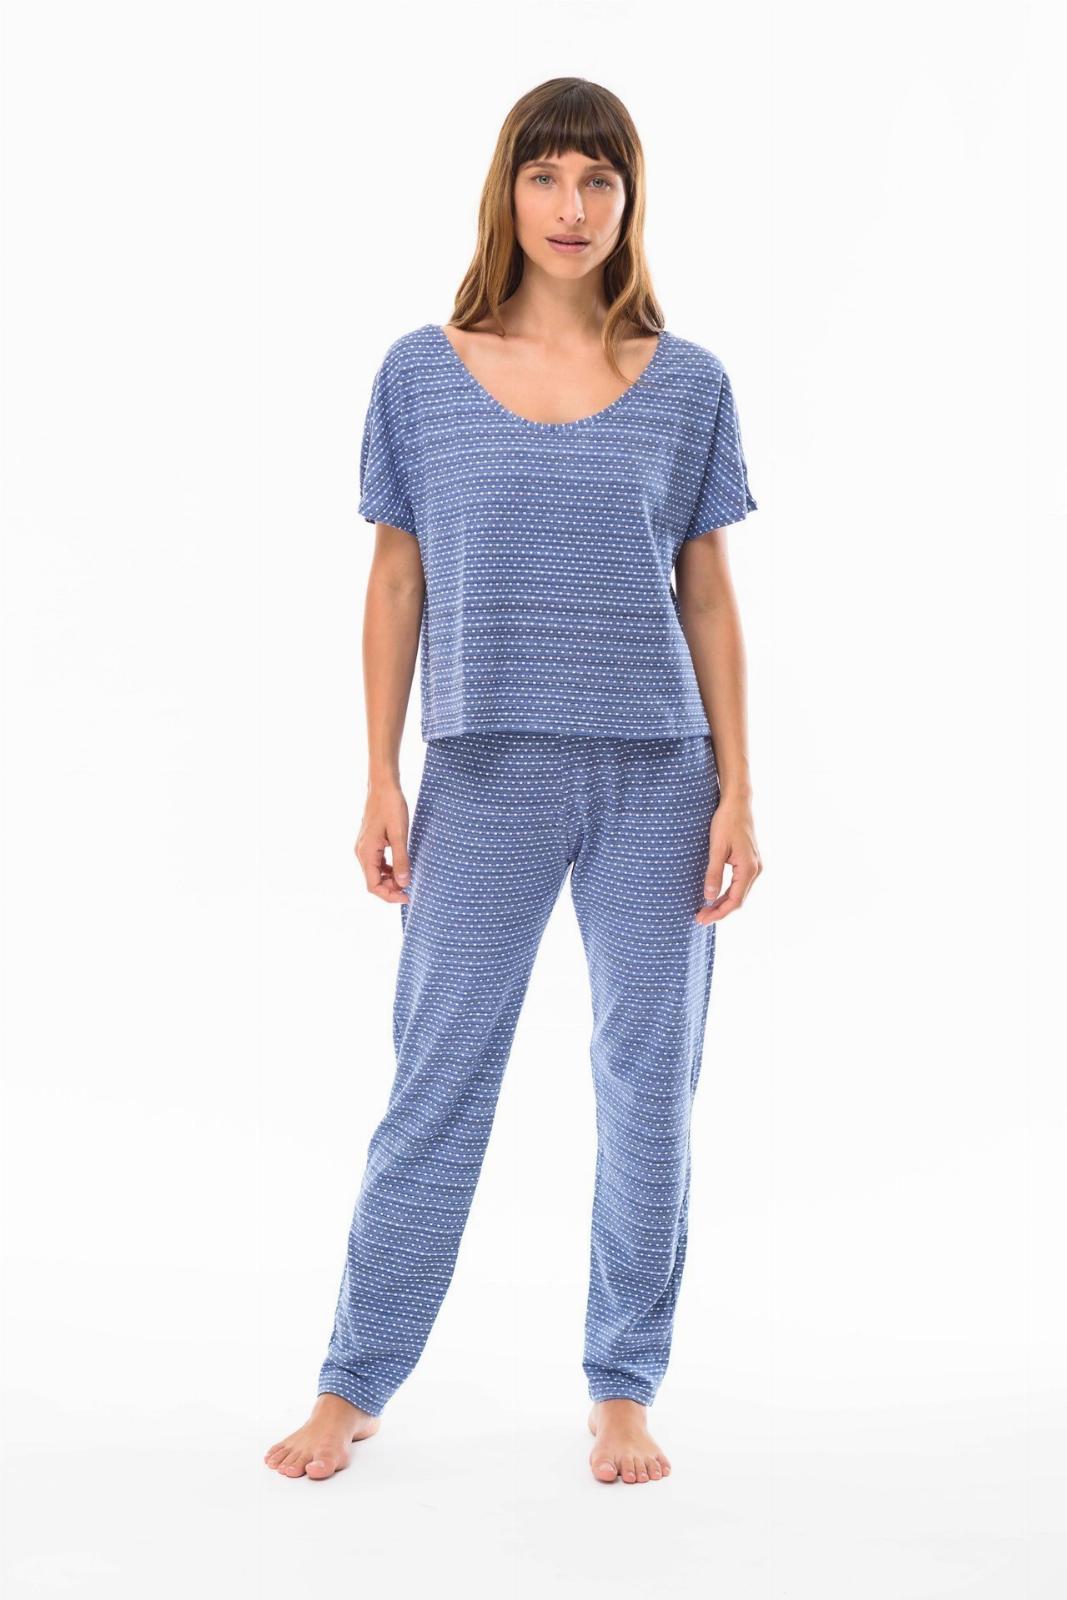 Alessia - Pijama largo de algodón azul s